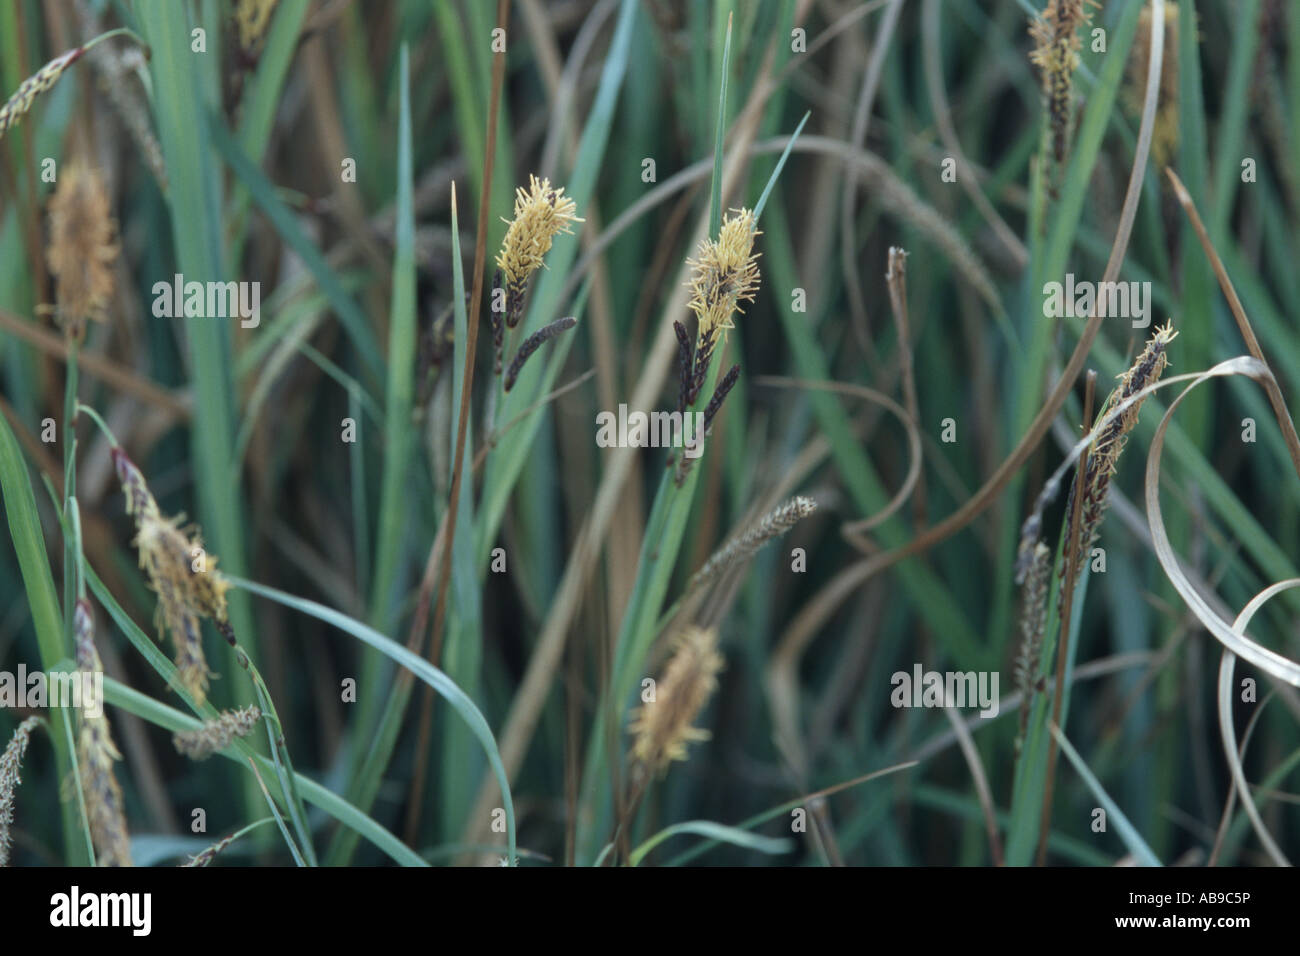 glaucous sedge (Carex flacca), male inflorescences upsite female inflorescences Stock Photo